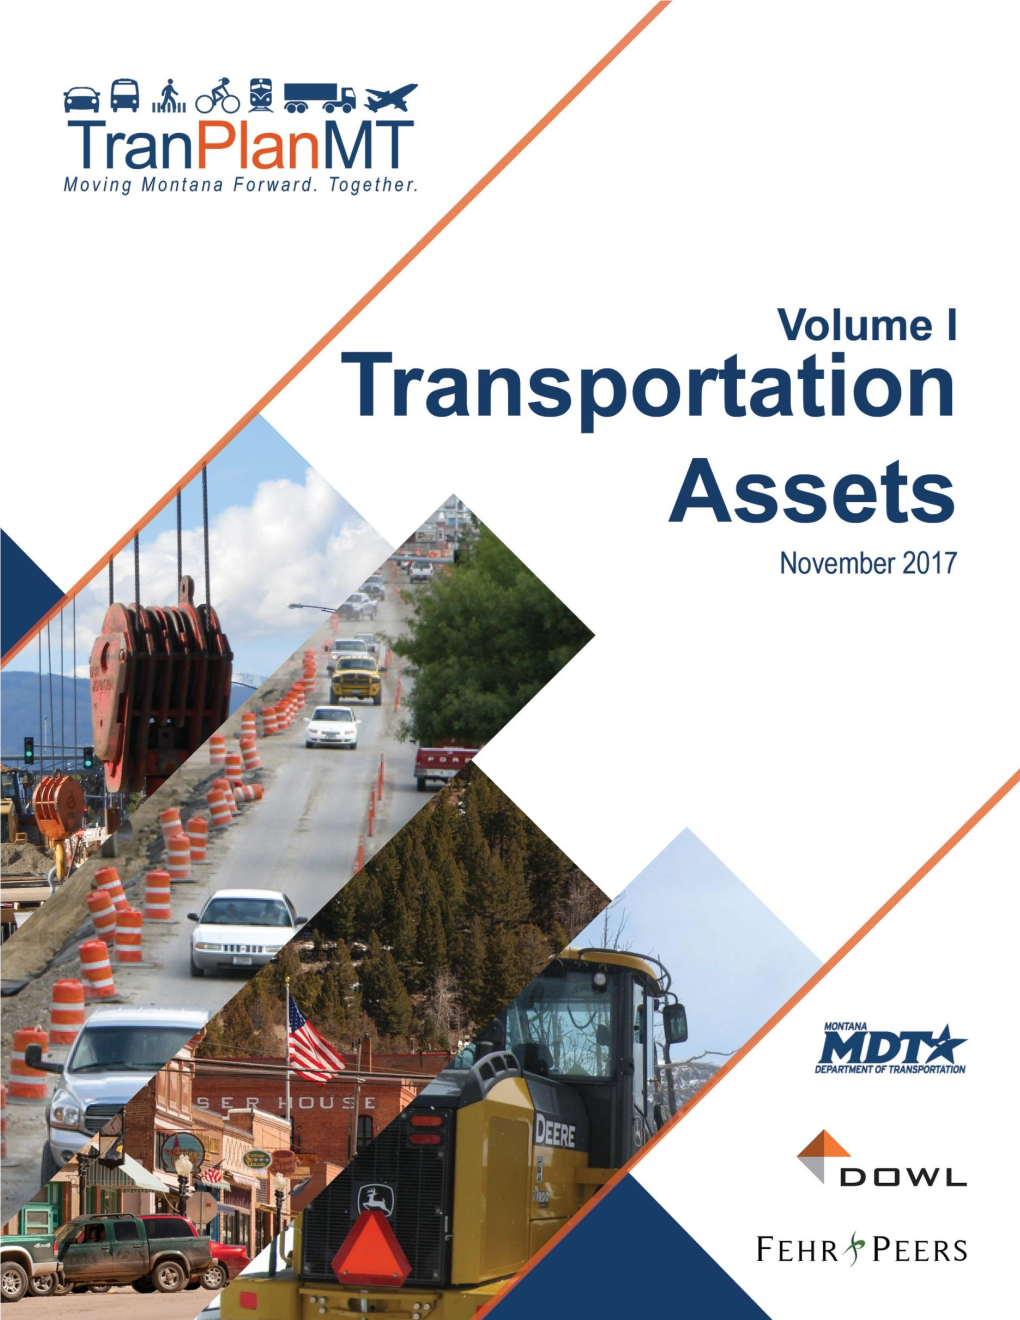 Tranplanmt Transportation Assets